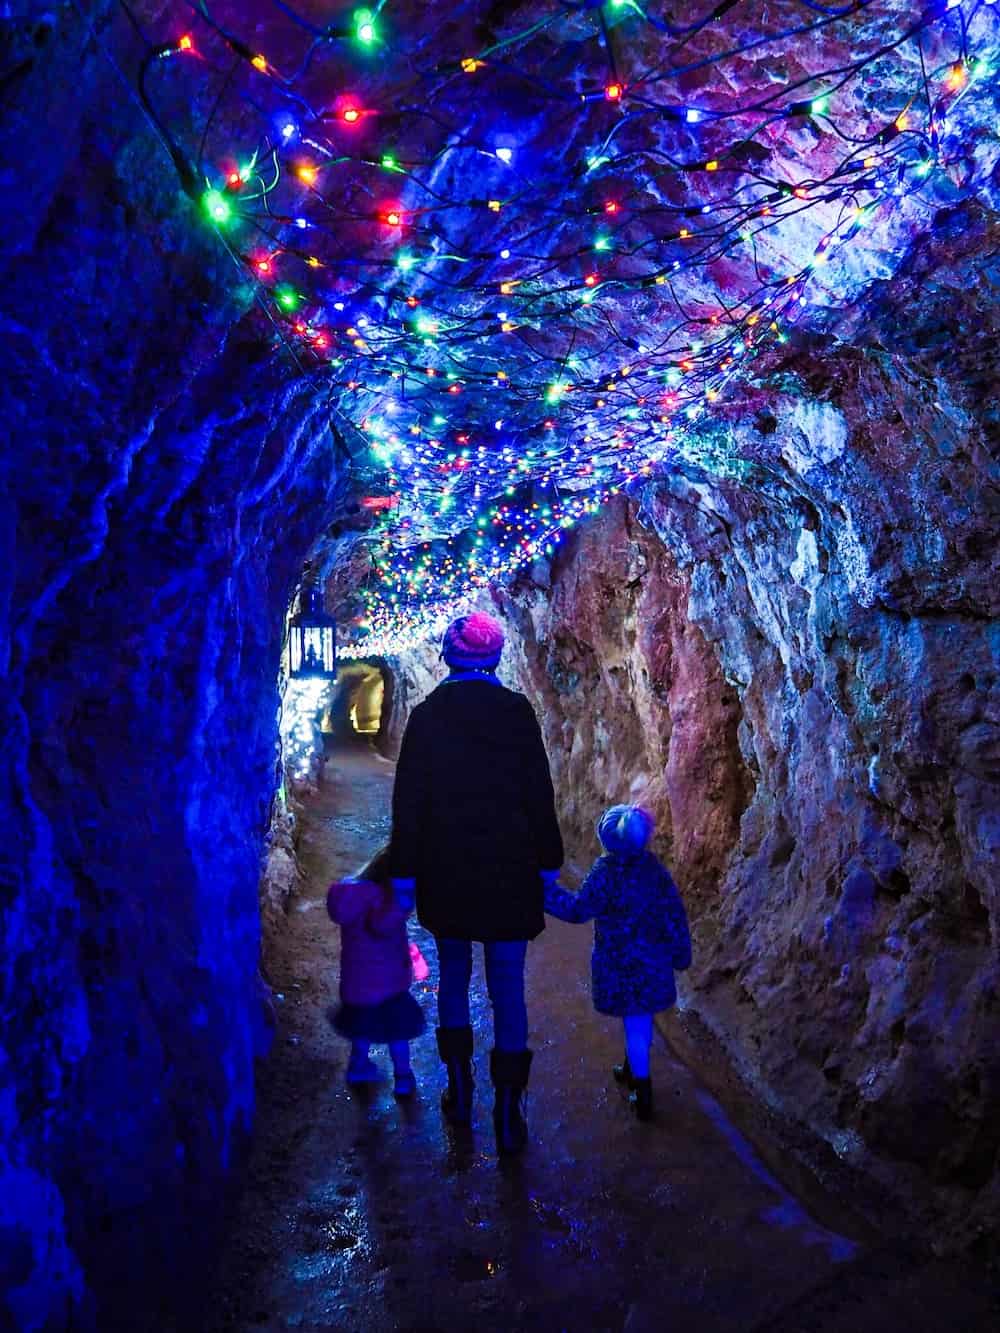 Illuminated caves at Wookey Hole Winter Wonderland this Christmas